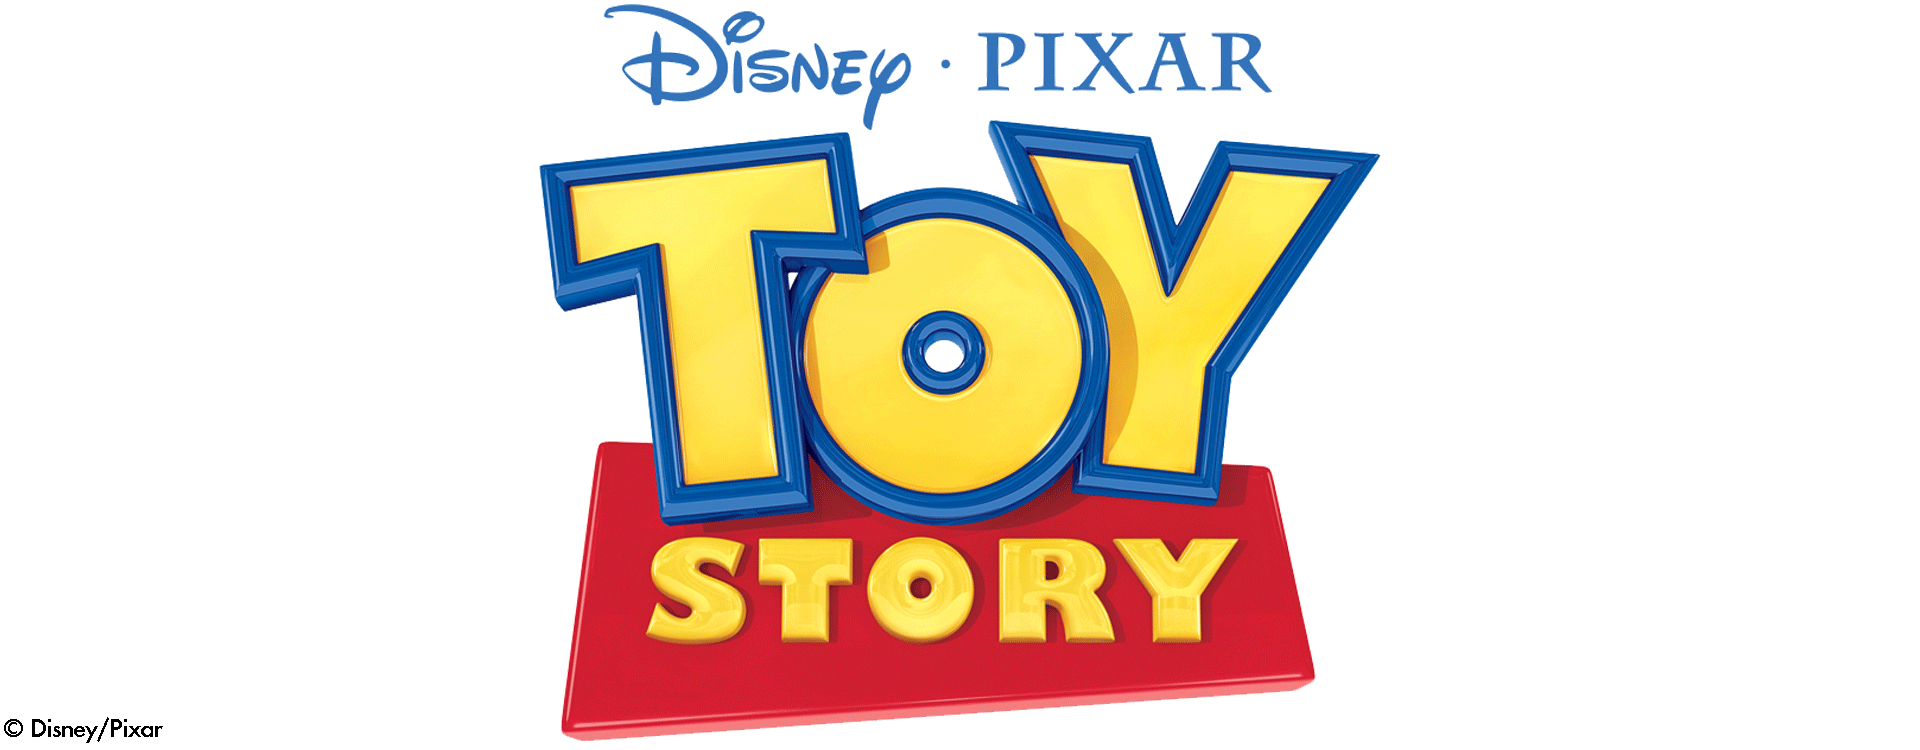 Disney Pixar Logo - Disney pixar toy story Logos